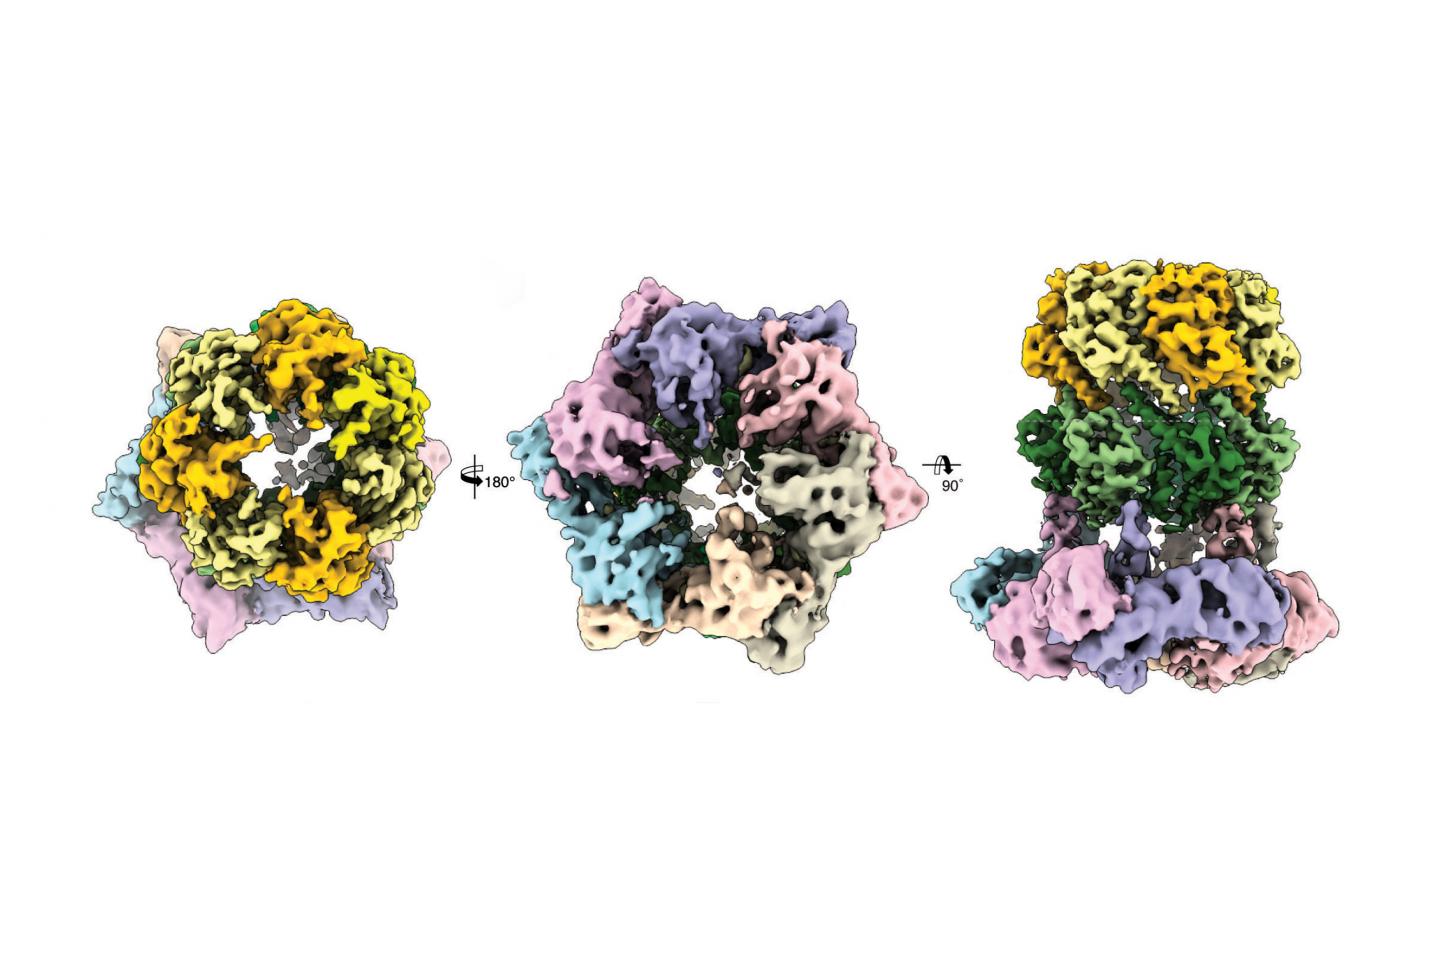 Kryo-elektronenmikroskopische Ansichten des Proteinkomplexes ClpX-ClpP